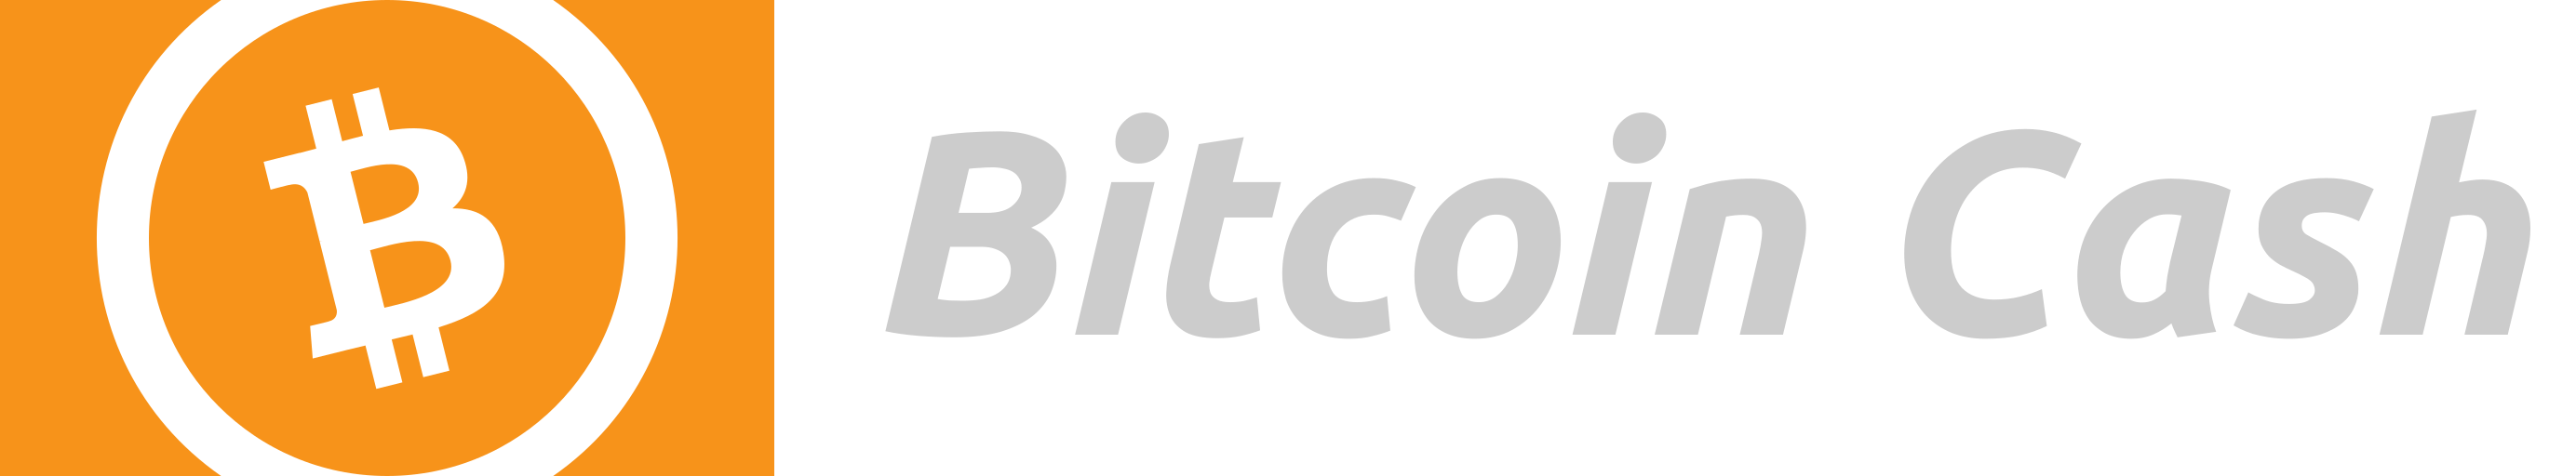 Bitcoin Cash Logo - Wordmark Bitcoincash Light, Bitcoin Cash & Litecoin Logos